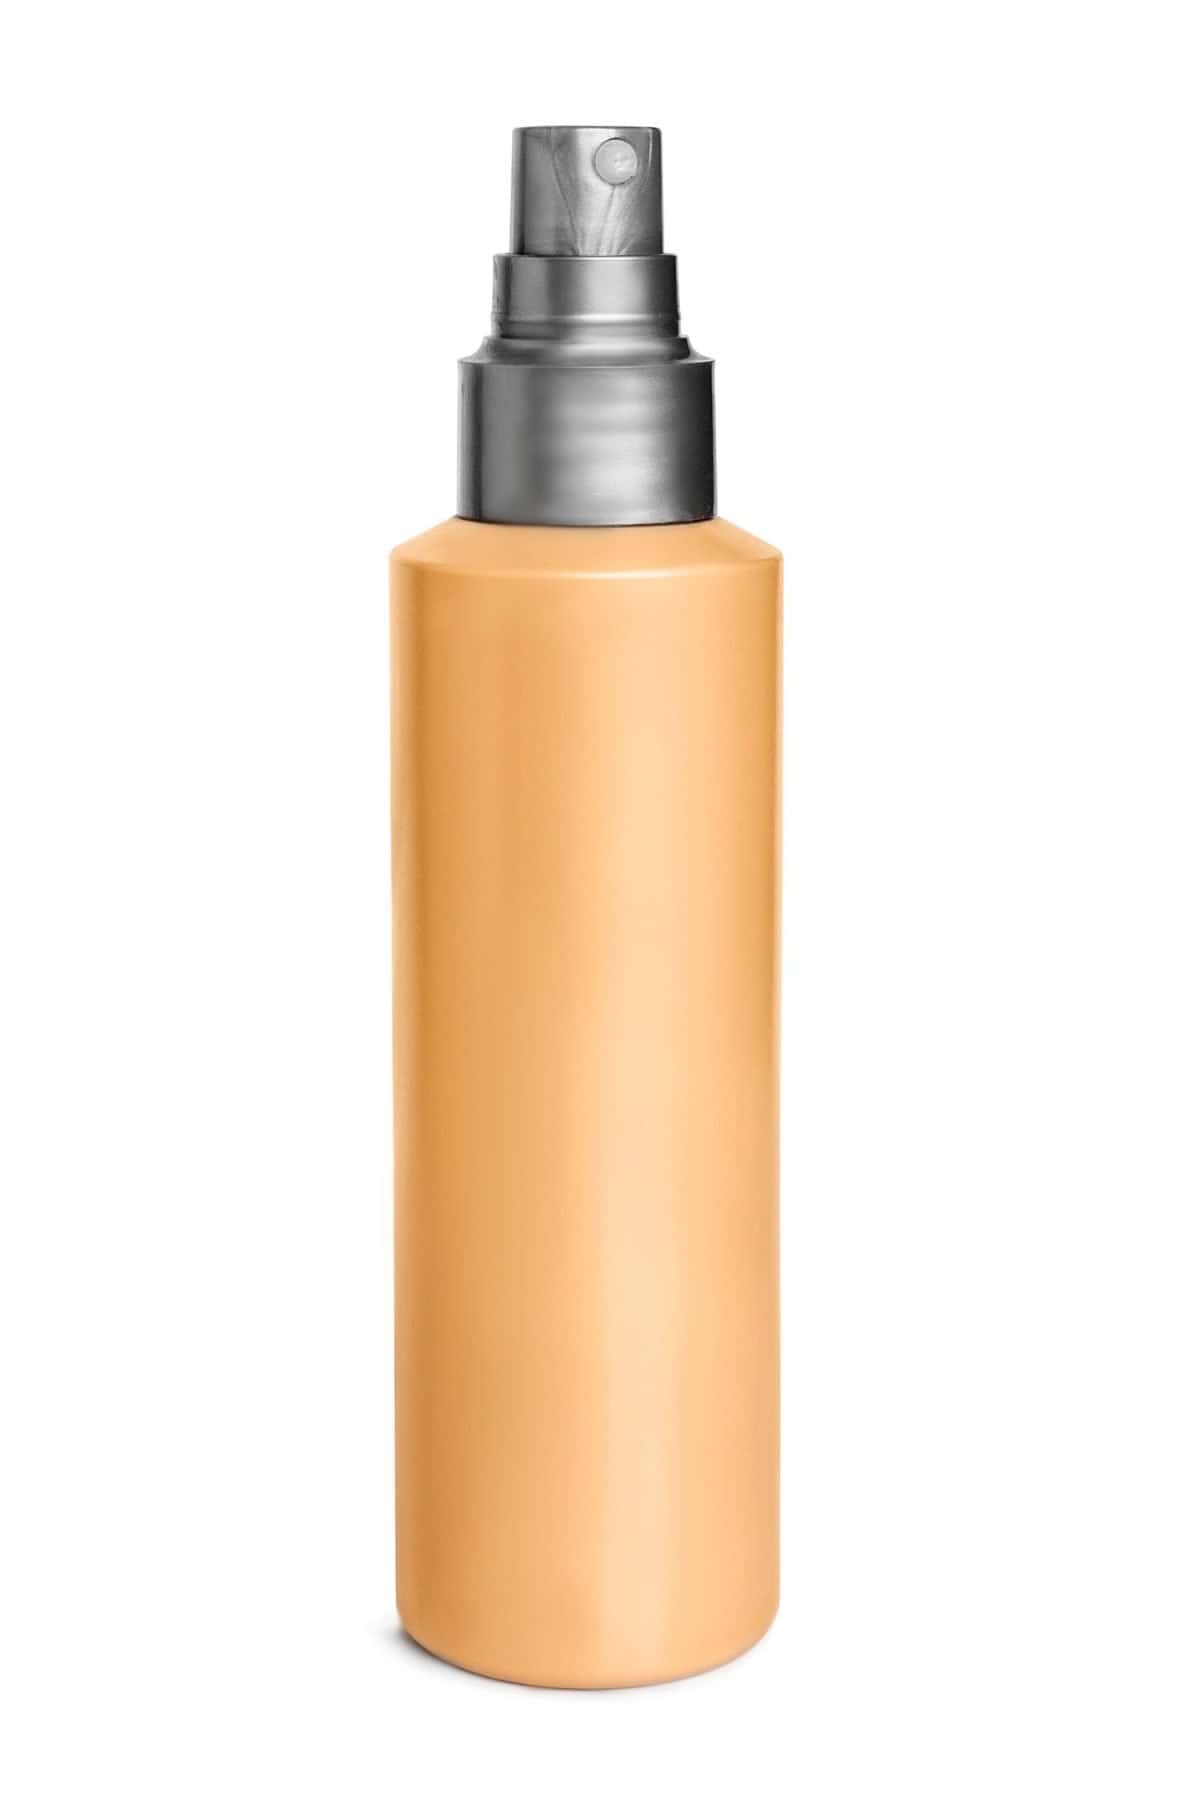 Blank yellow mist spray bottle isolated on white background. Best treatment options for diaper rash.